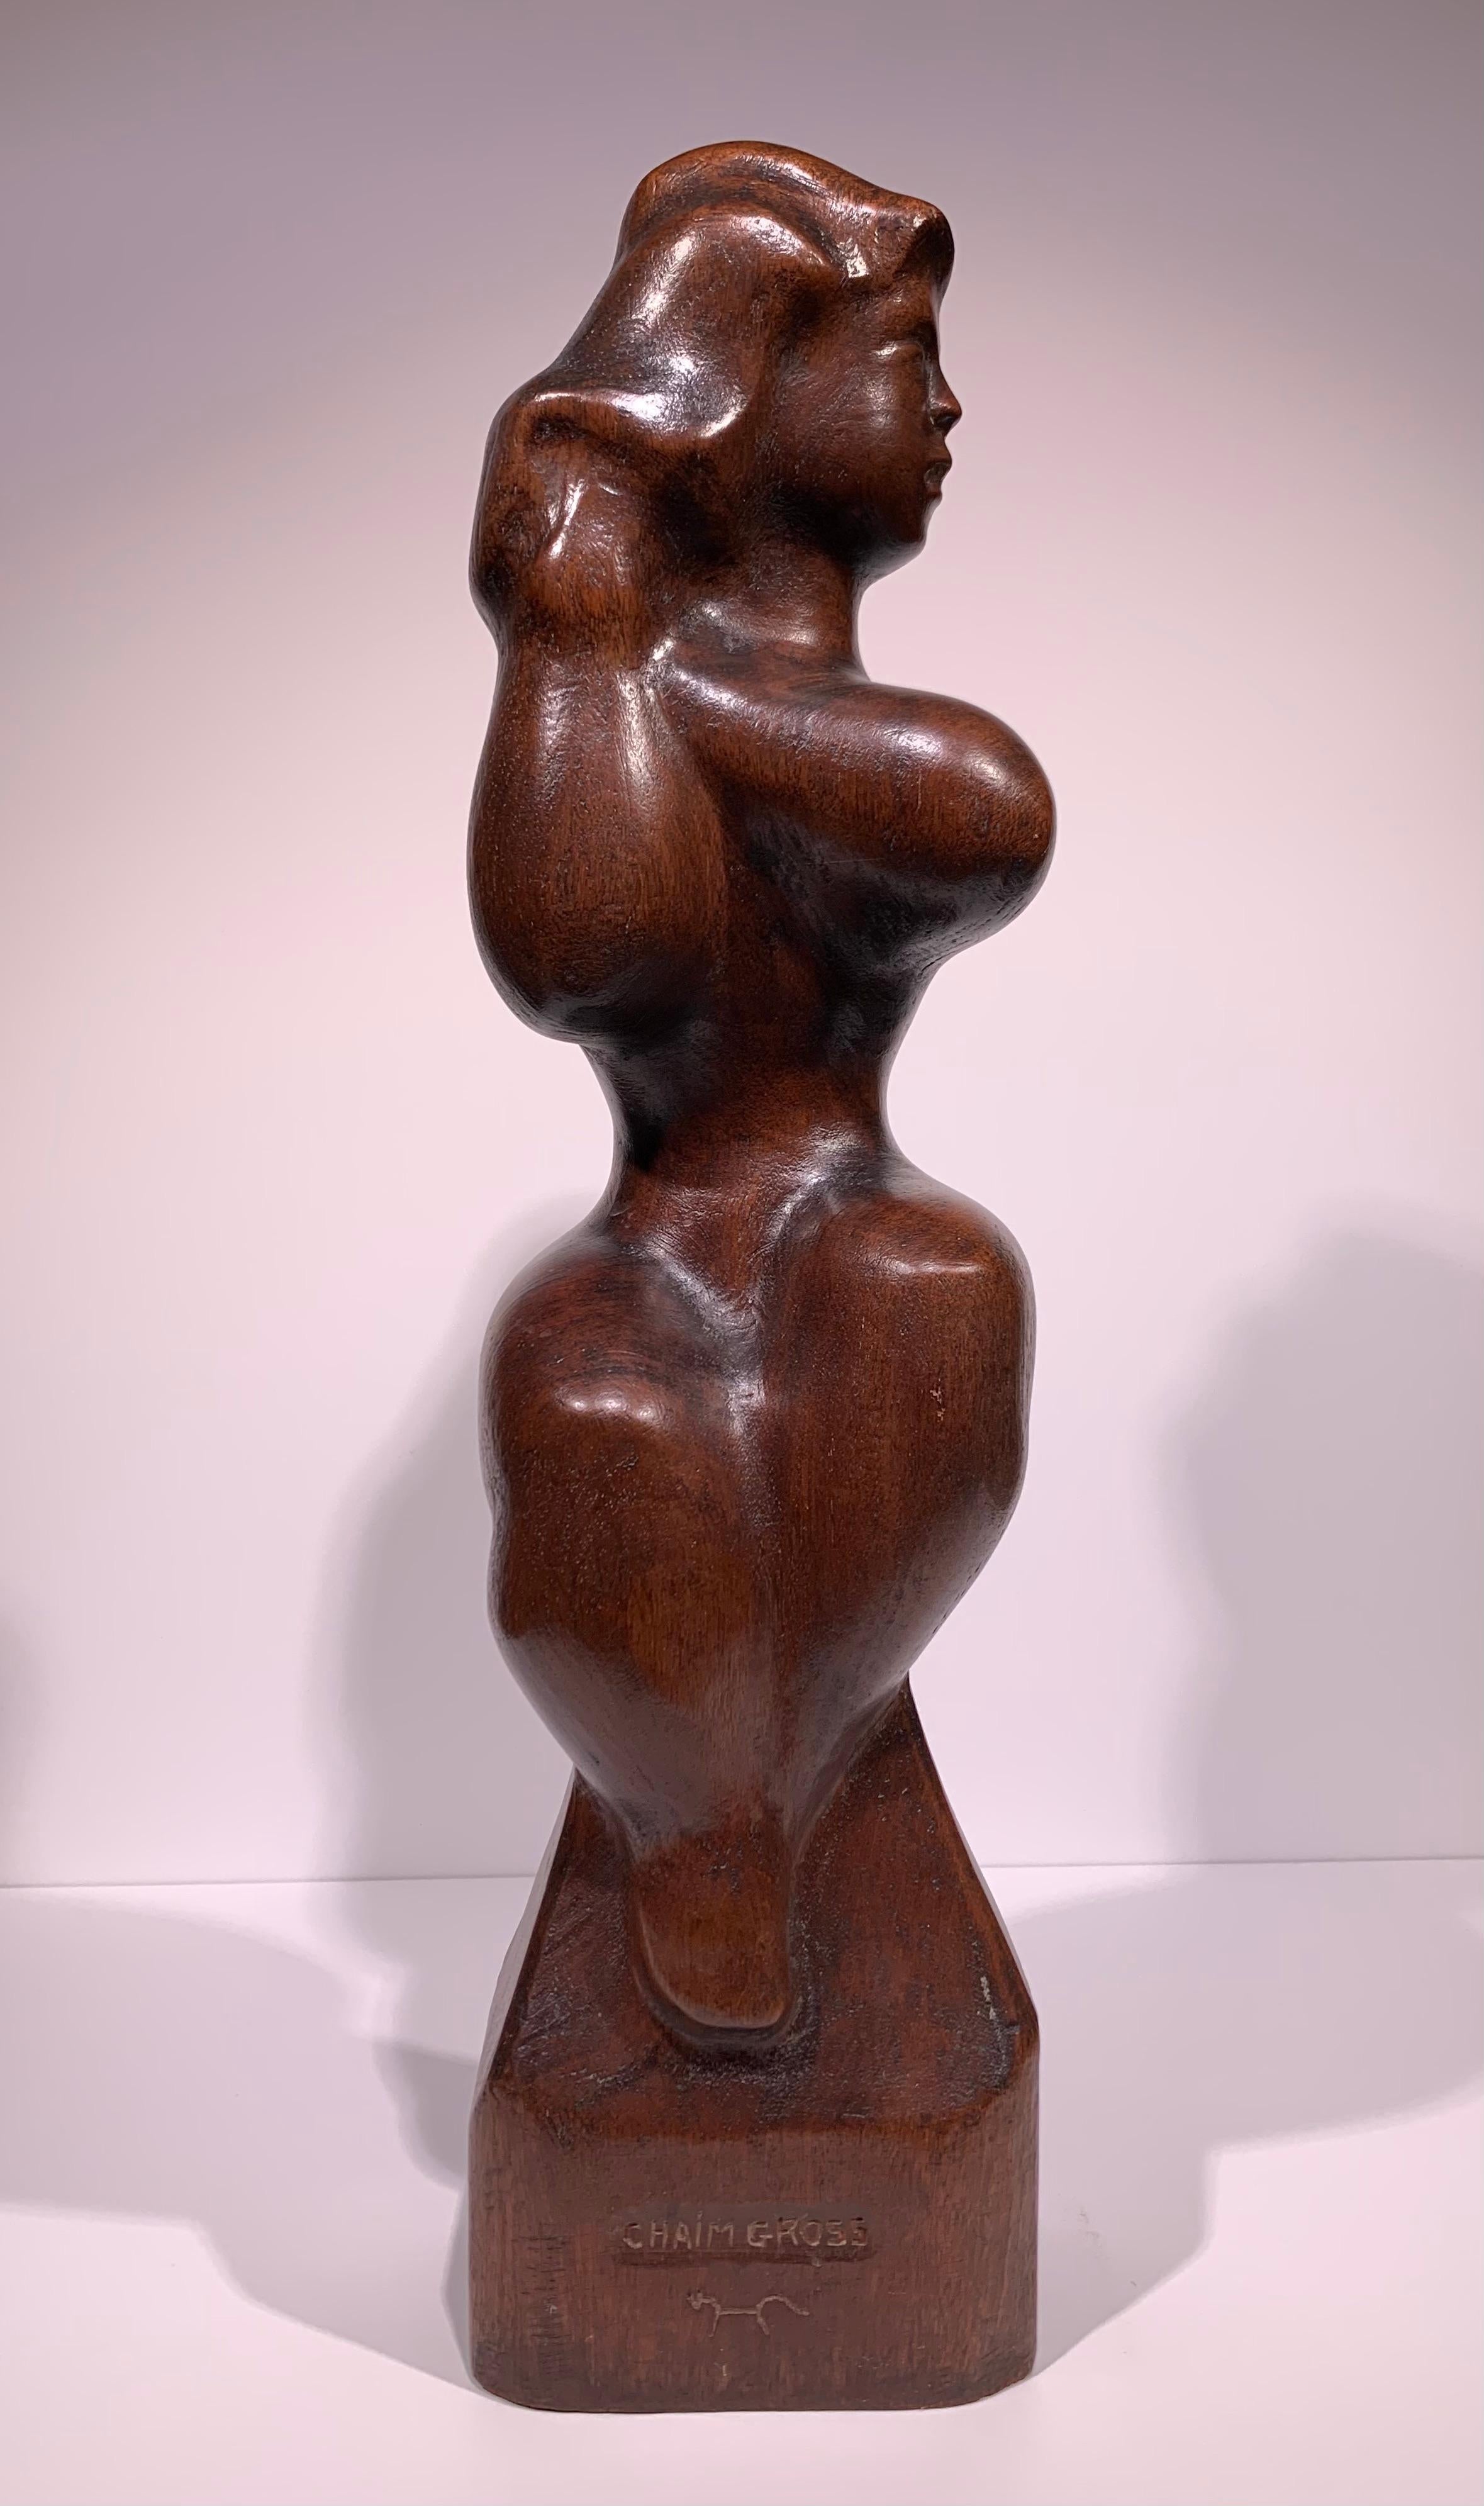 Chaim Gross Nude Sculpture - Woman Brushing Hair